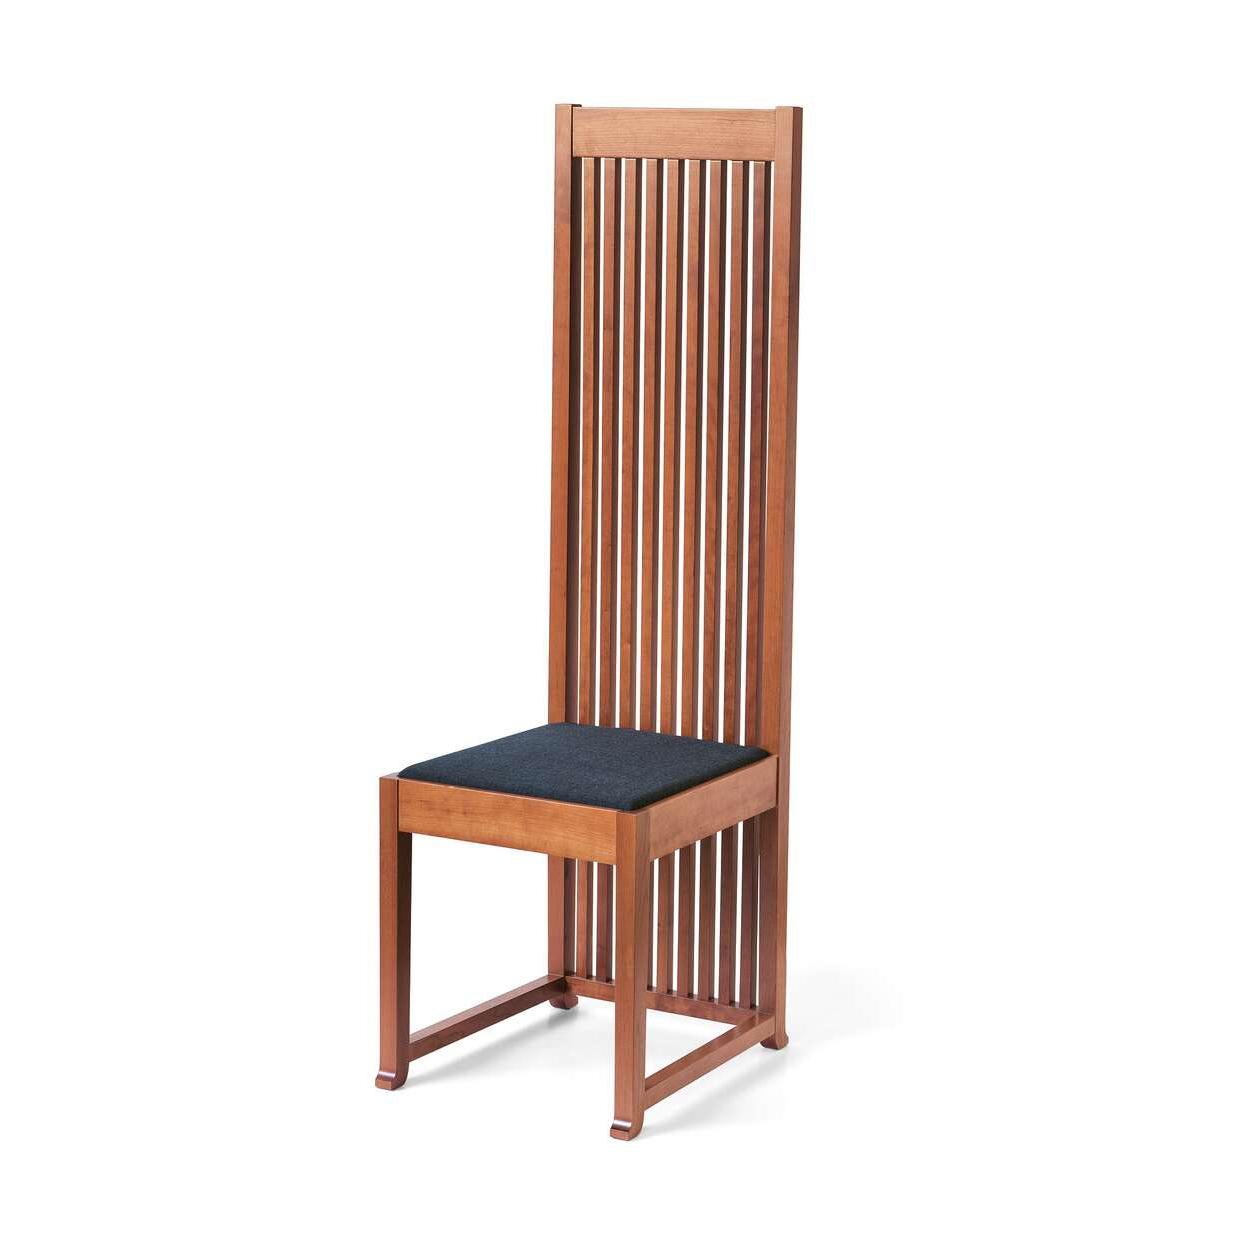 Contemporary Frank Lloyd Wrigh Black Robie Chair by Cassina